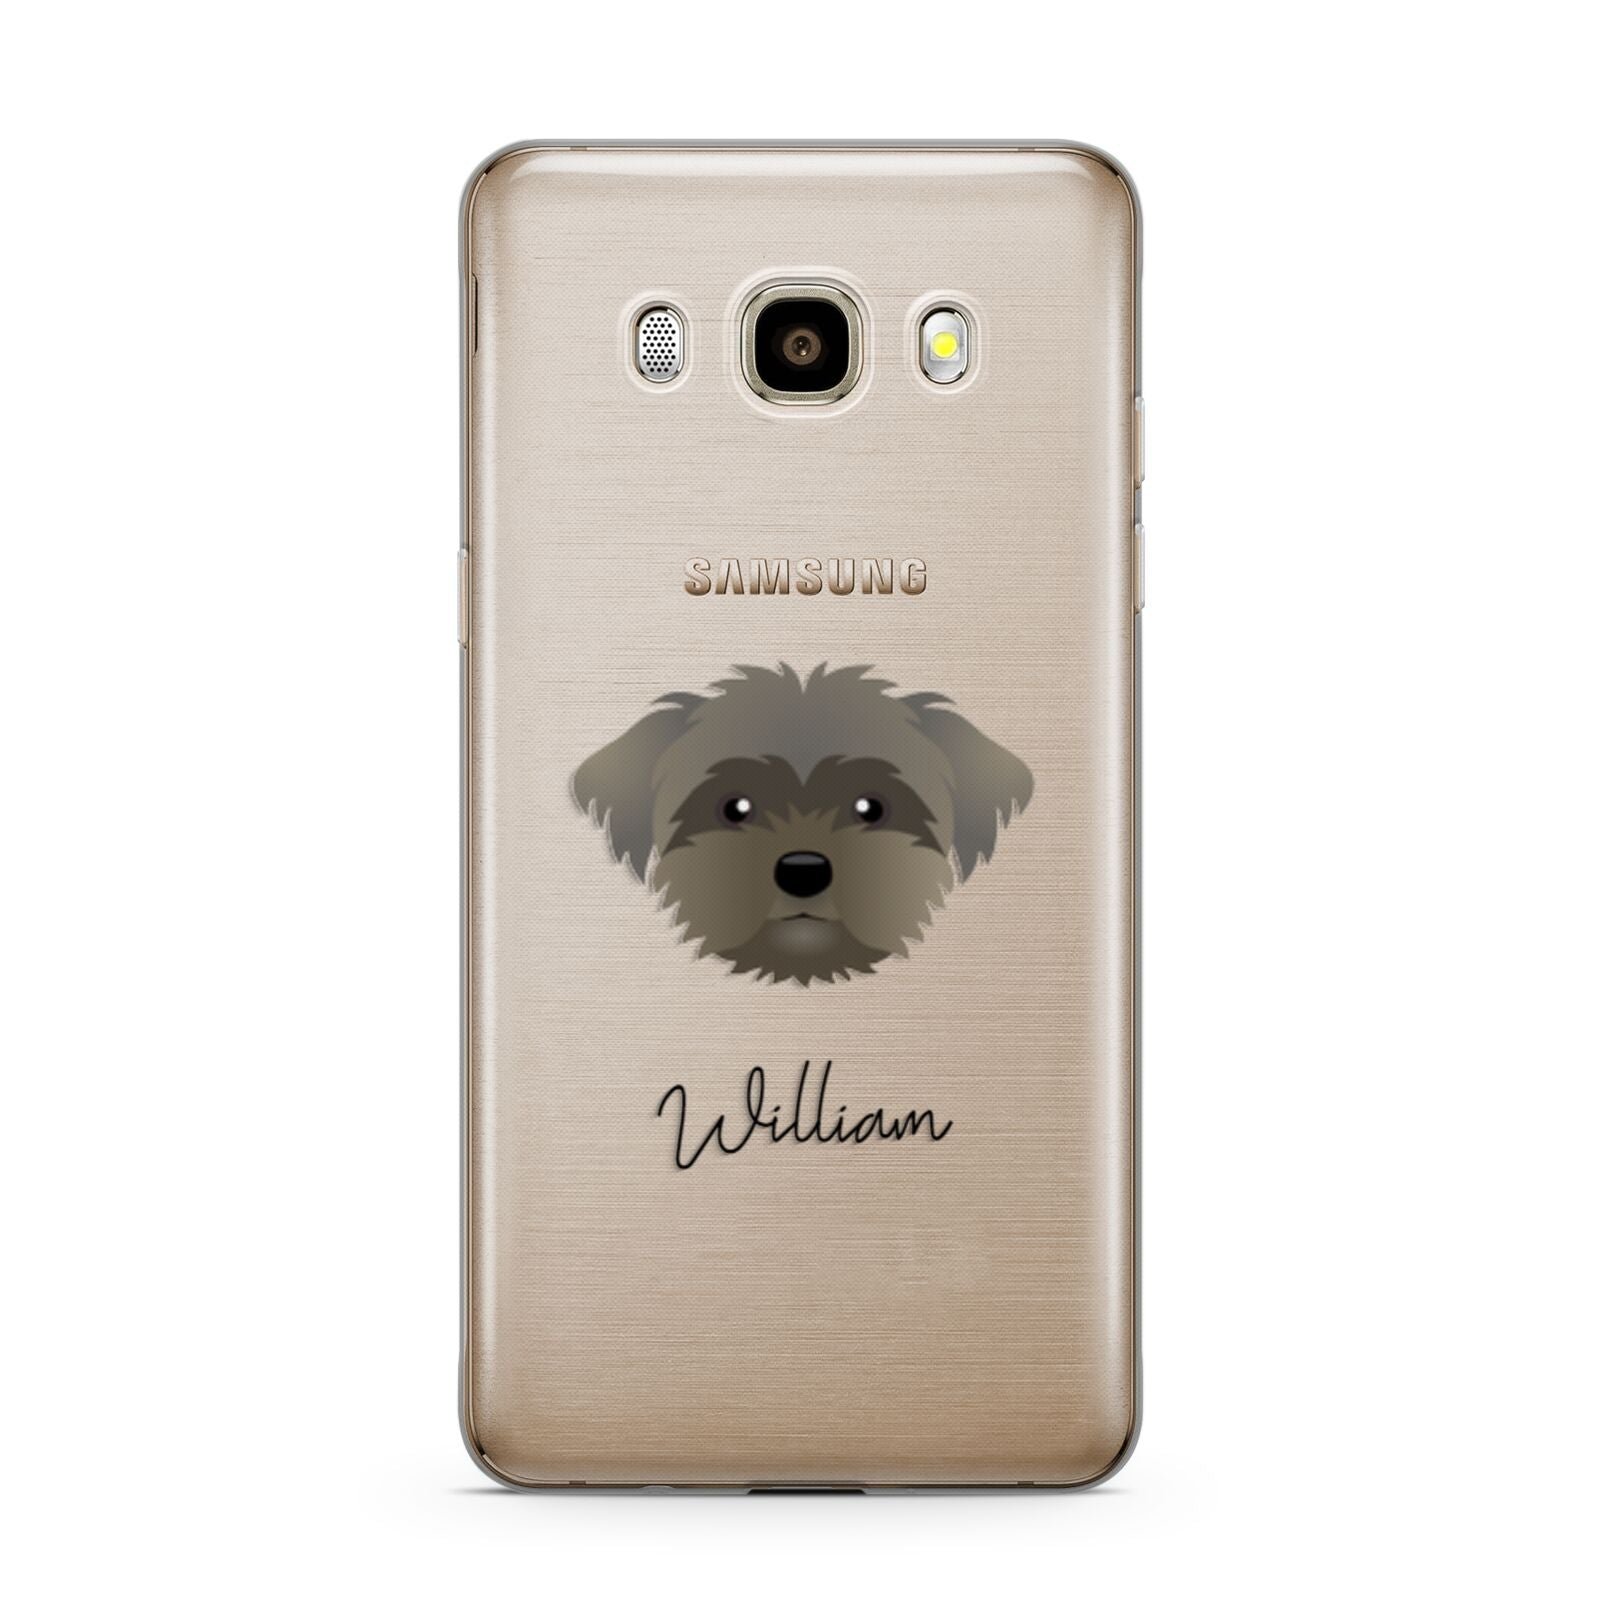 Peek a poo Personalised Samsung Galaxy J7 2016 Case on gold phone